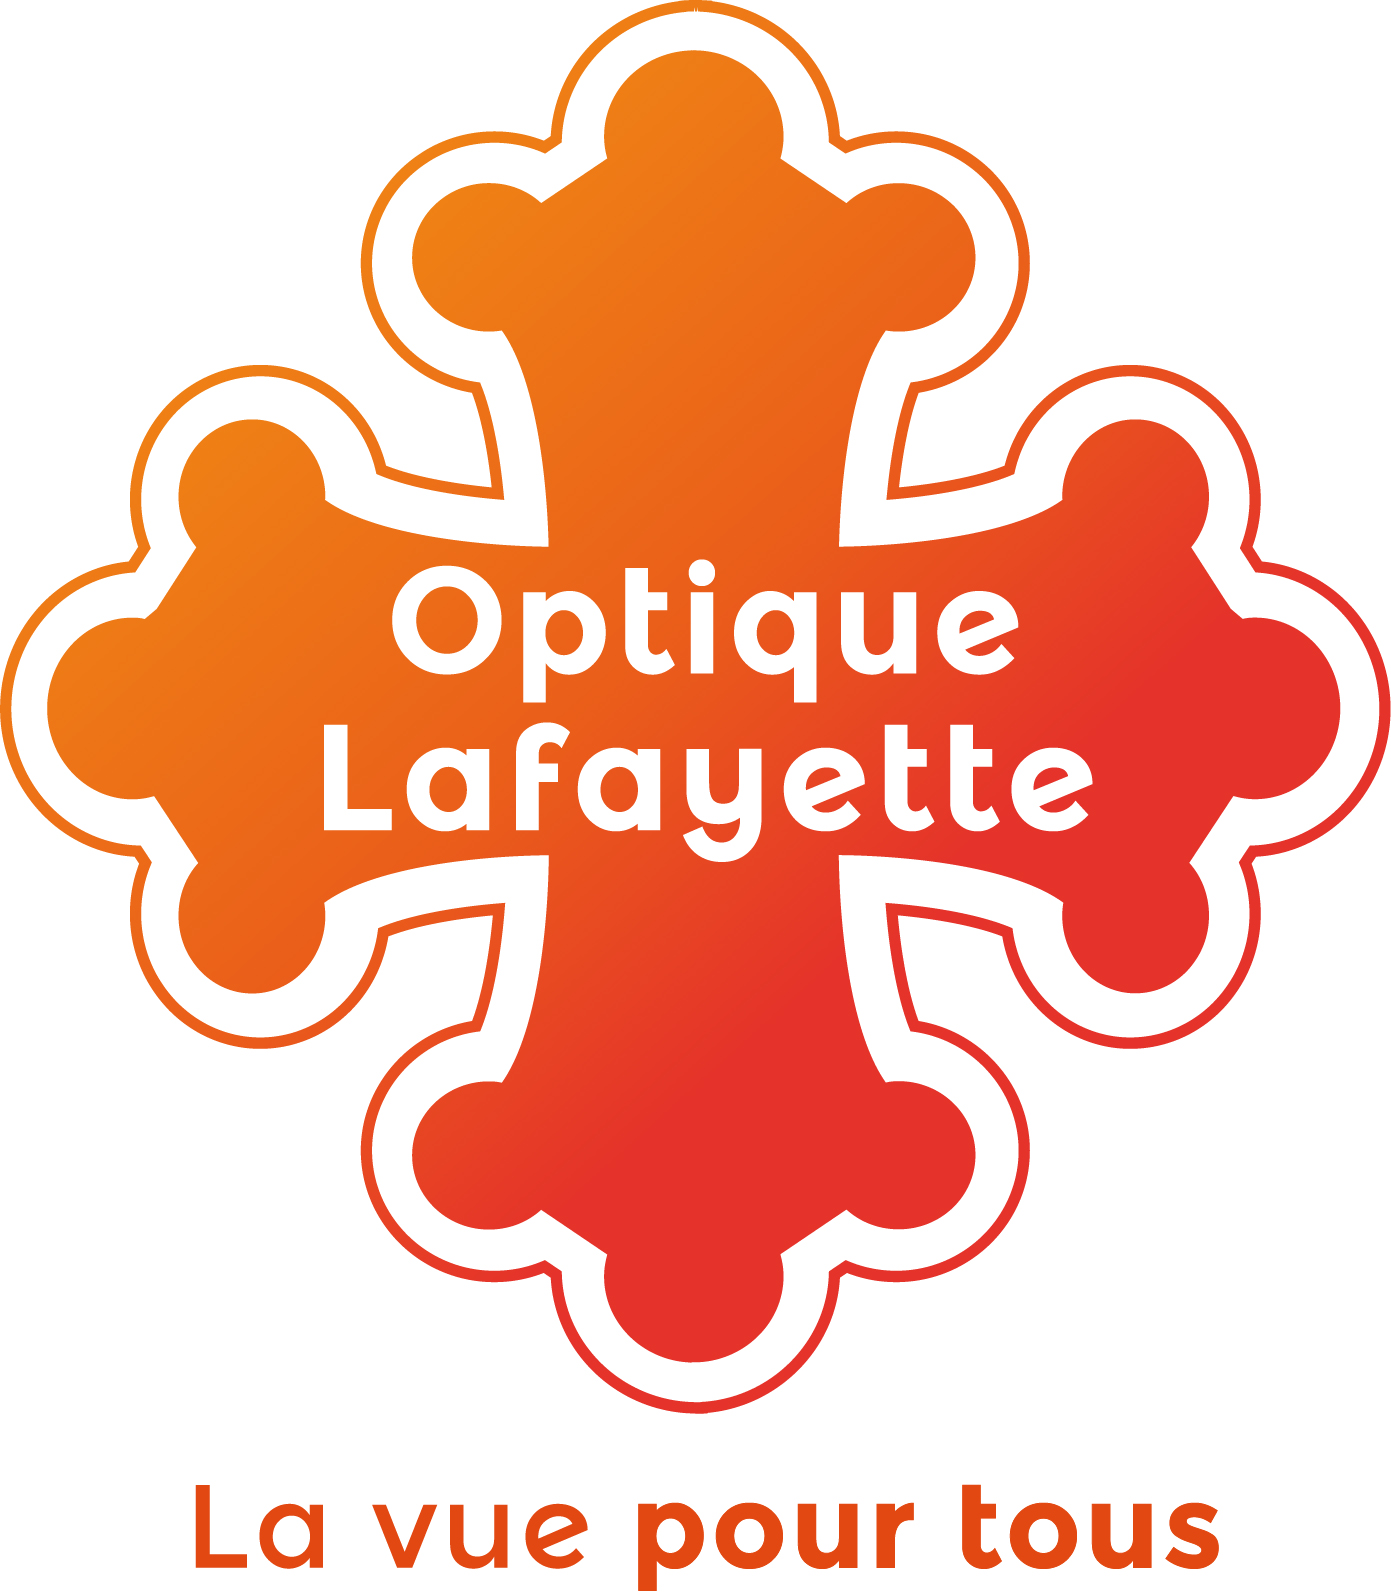 Optique Lafayette Albi